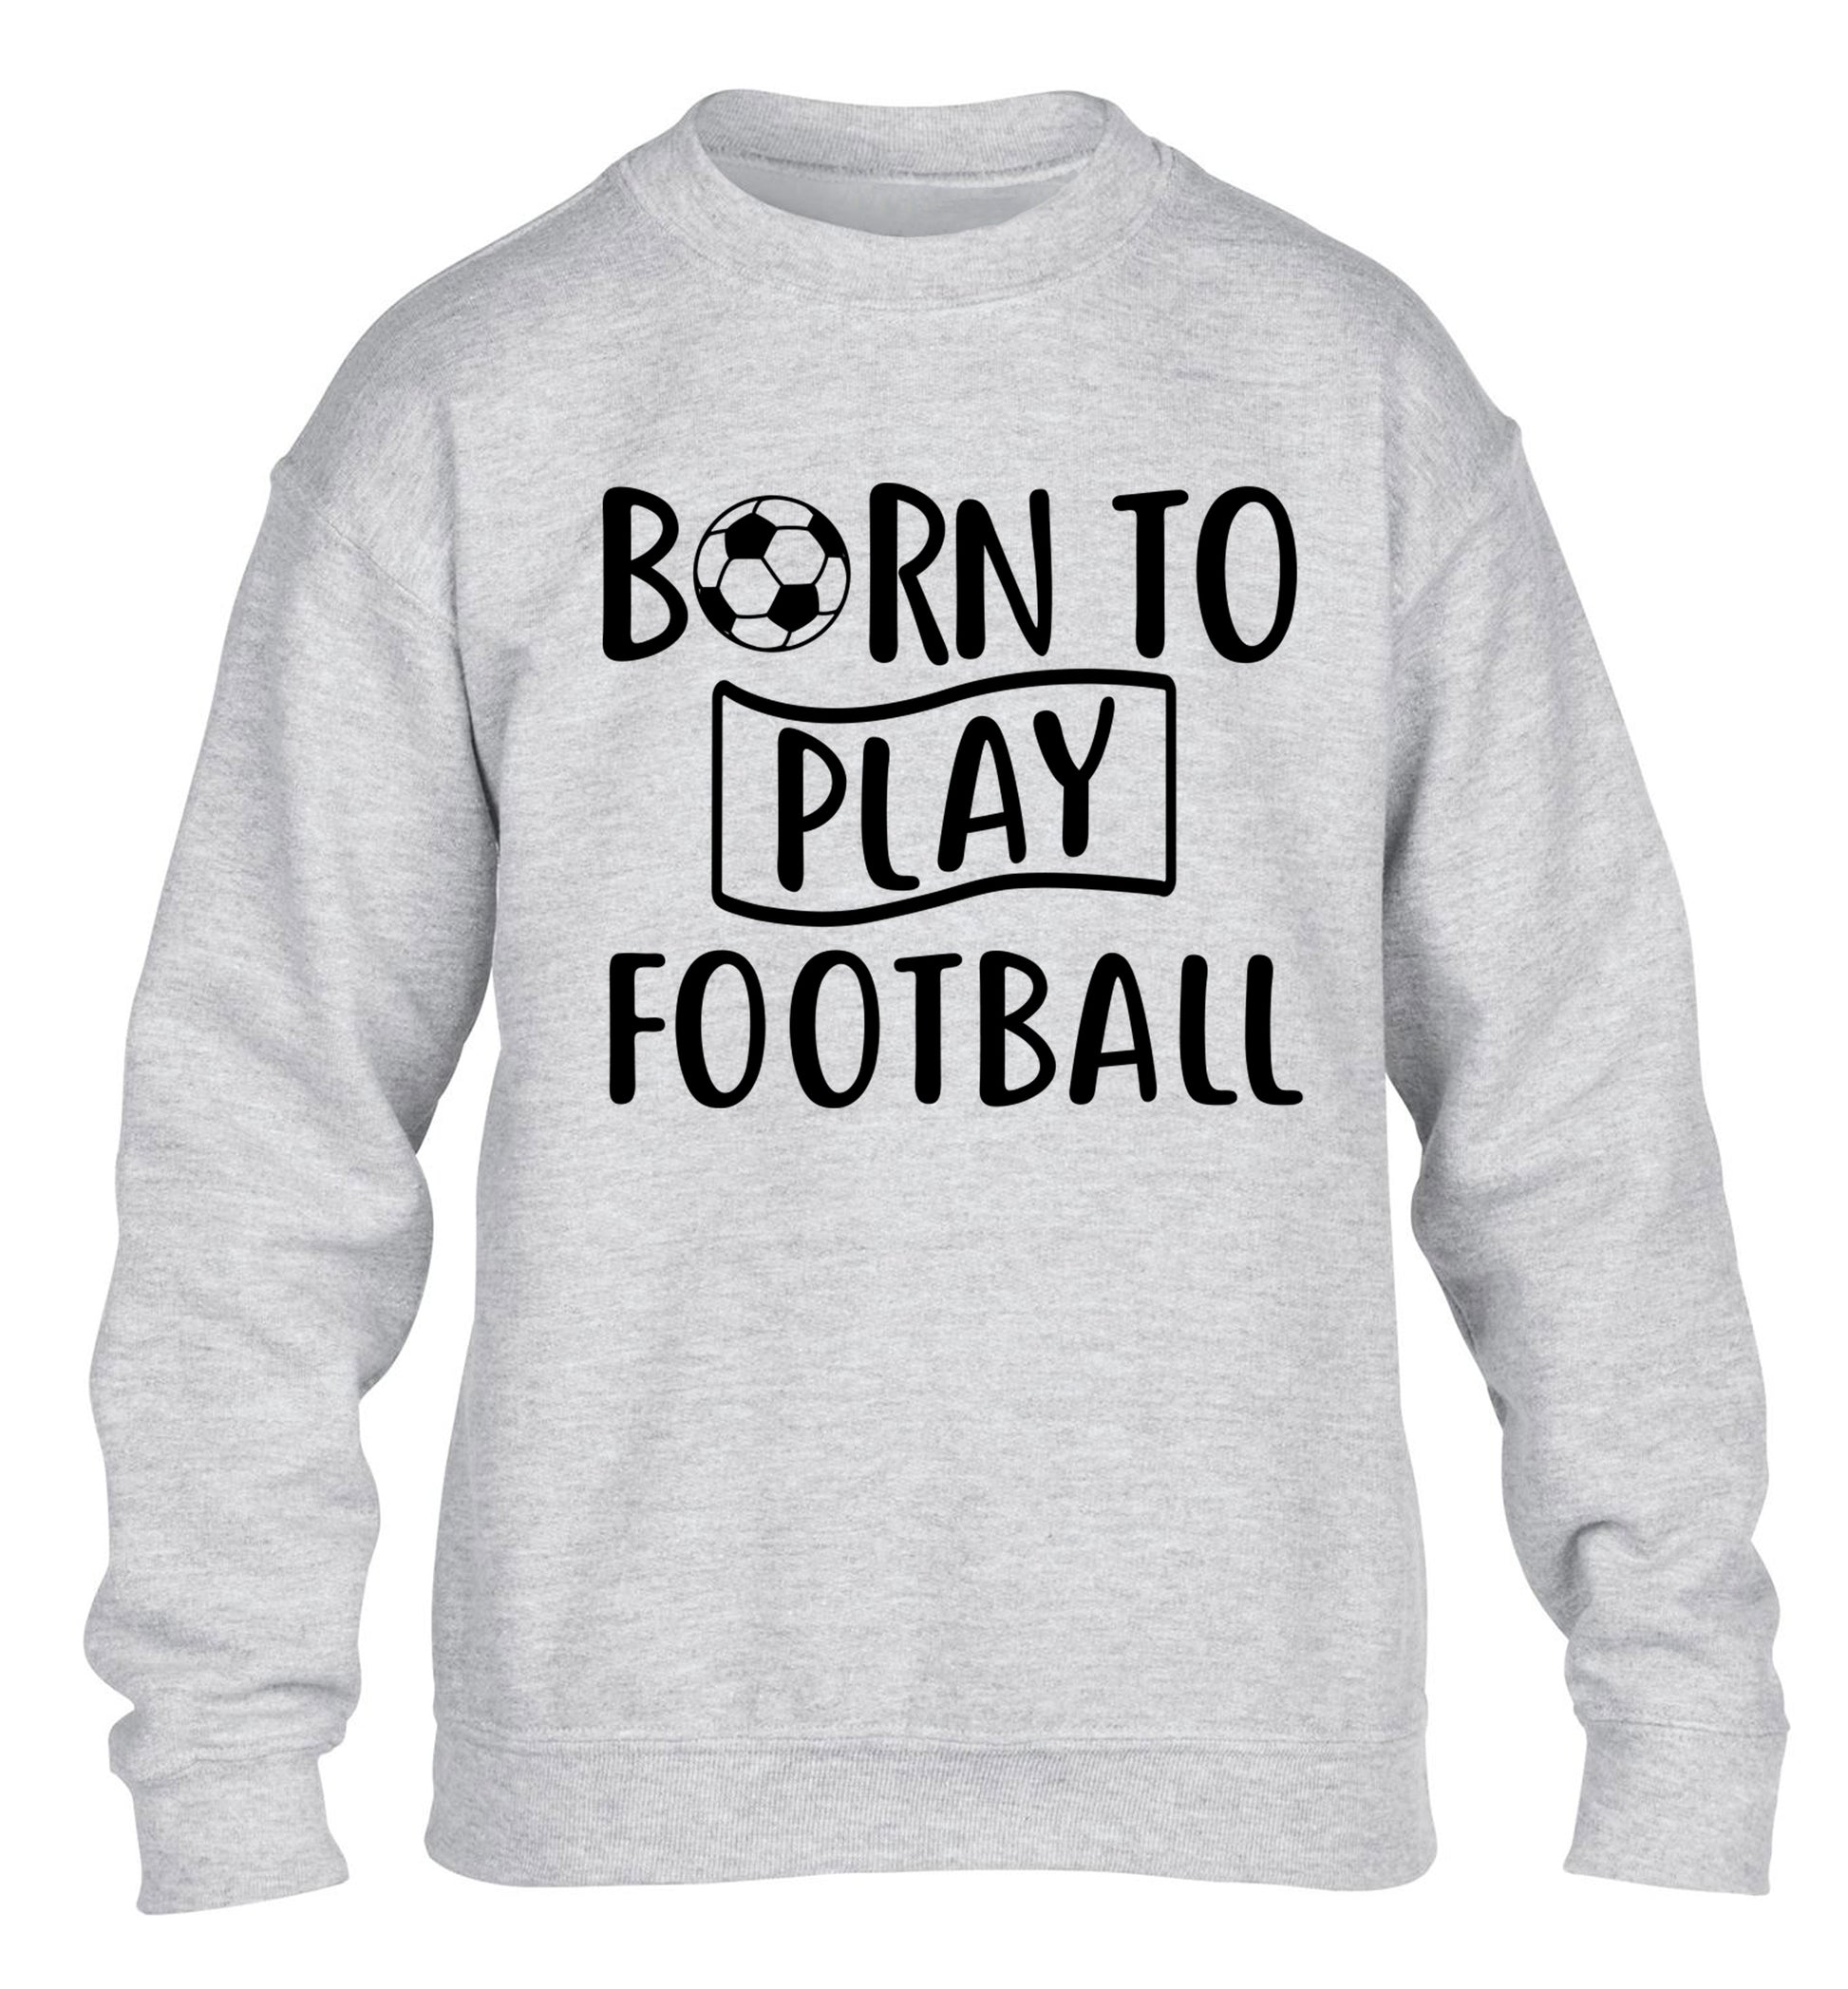 Born to play football children's grey sweater 12-14 Years